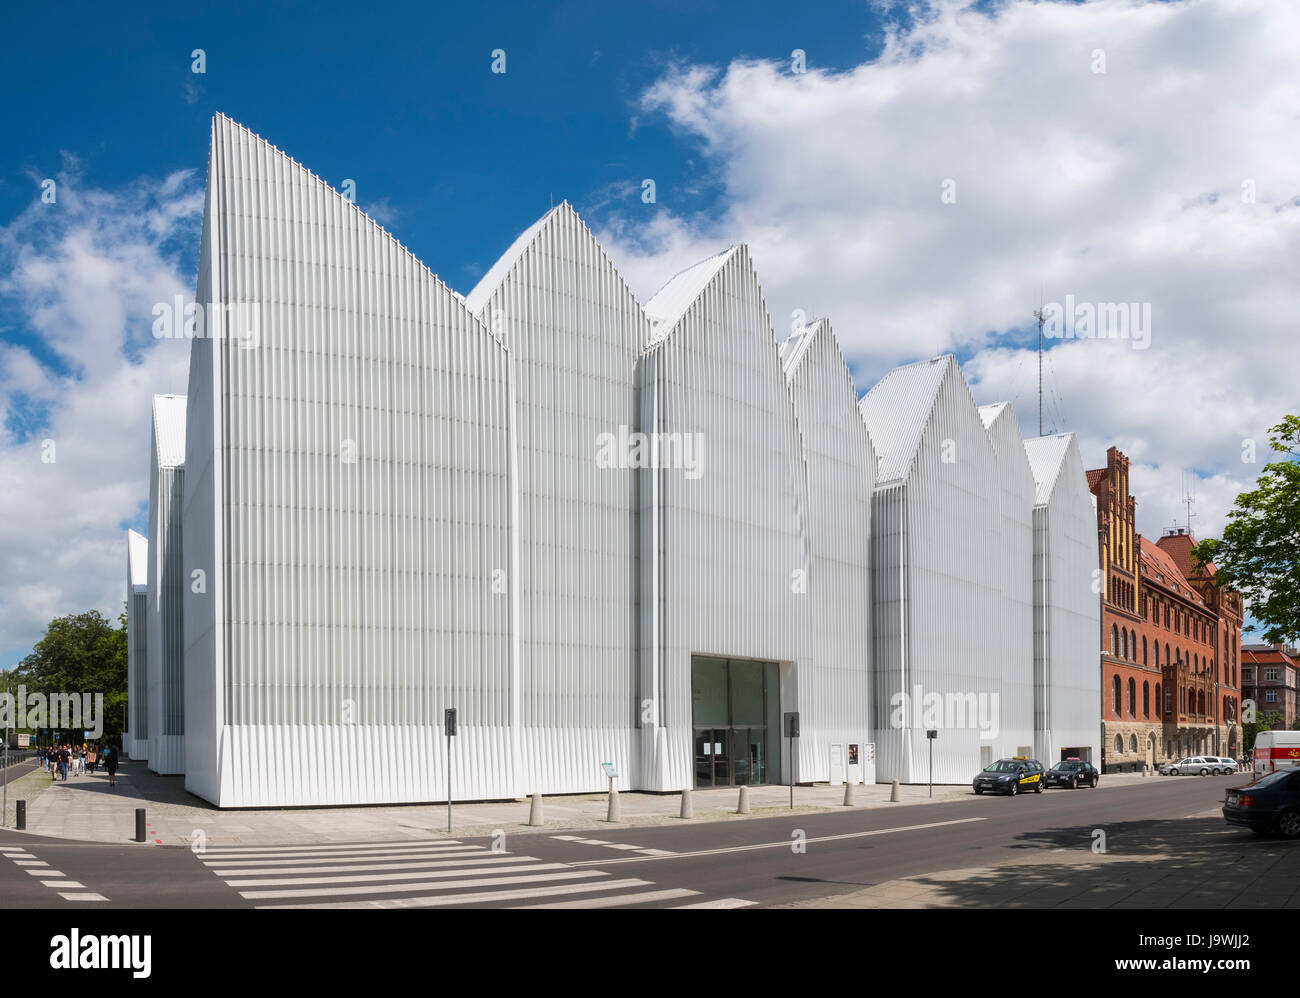 Exterior view of Szczecin Filharmonia concert hall in Szczecin , Poland. Stock Photo